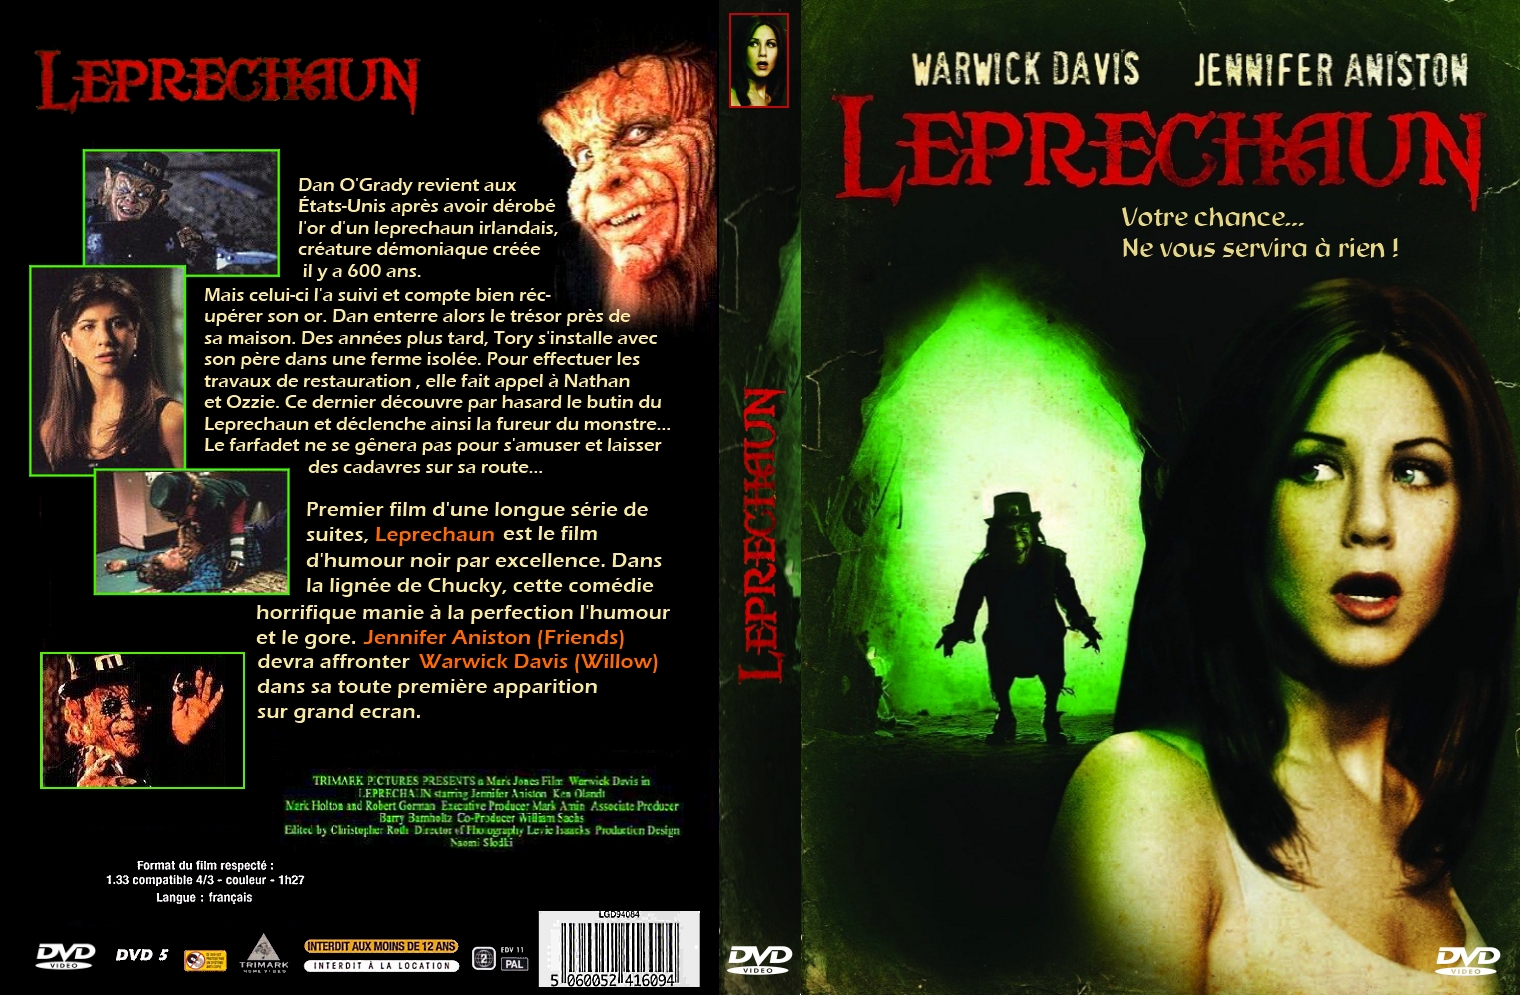 Jaquette DVD Leprechaun custom v2